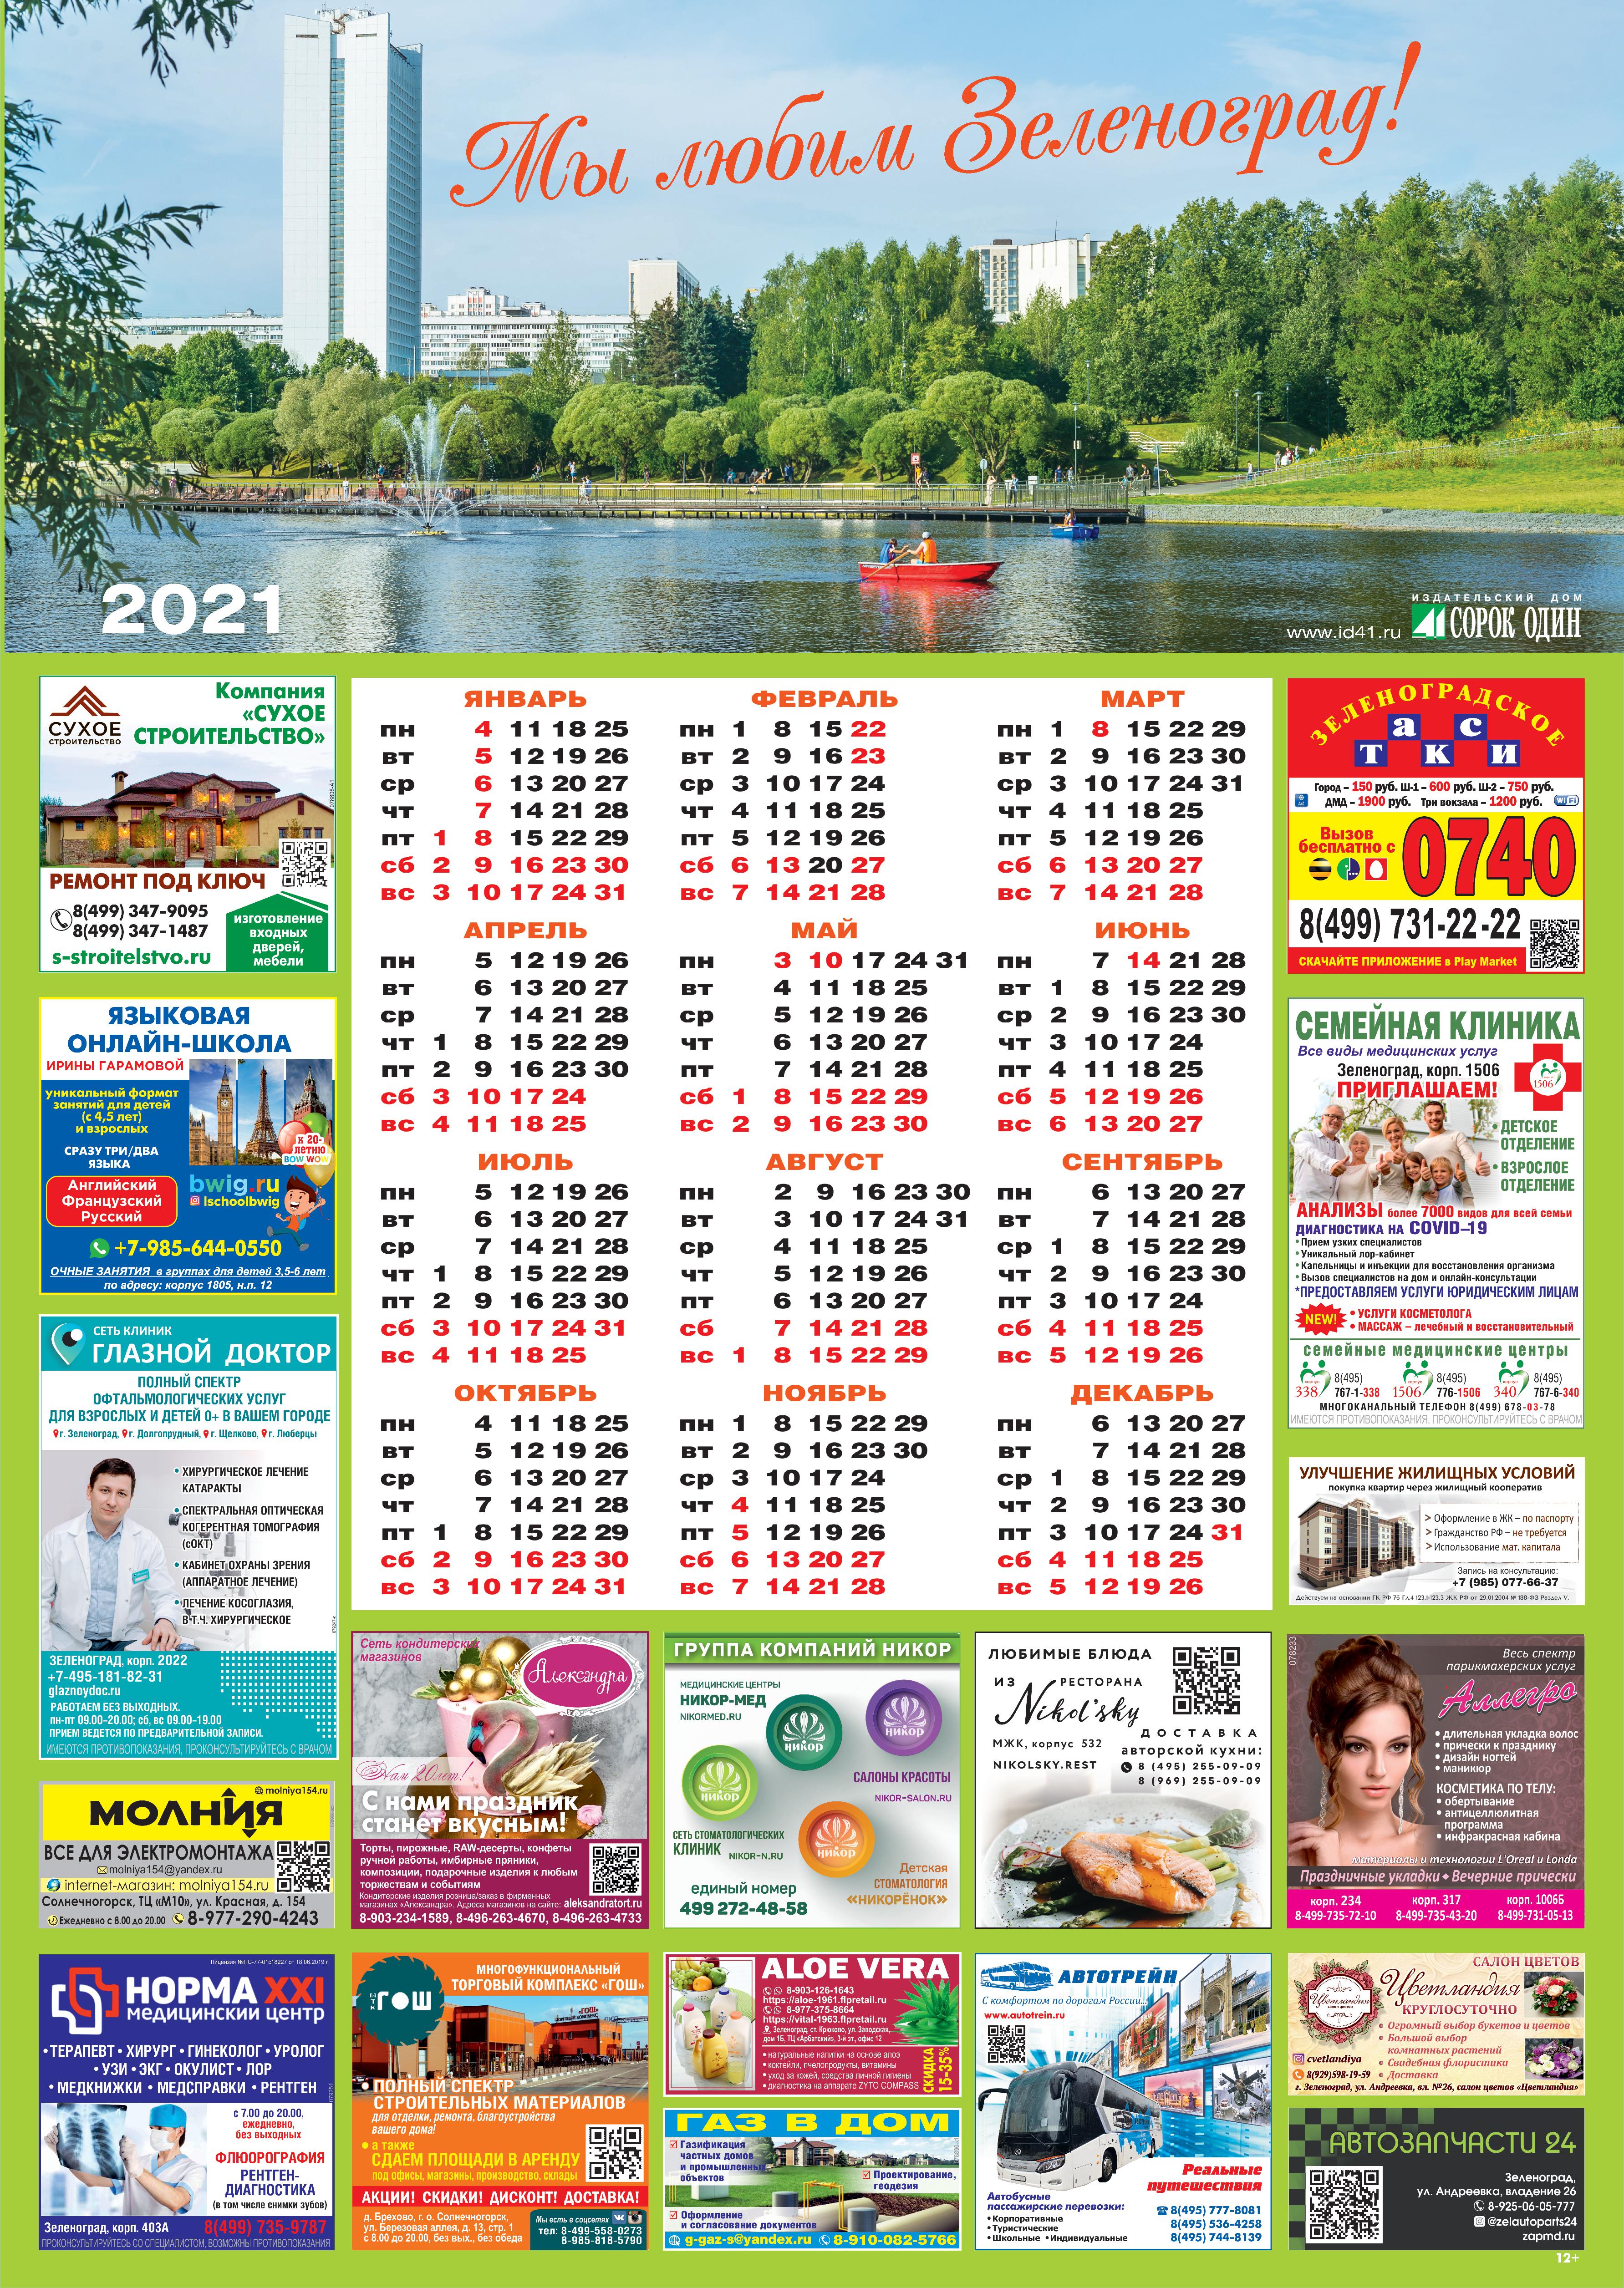 Календарь «Мы любим Зеленоград!» А1 2021